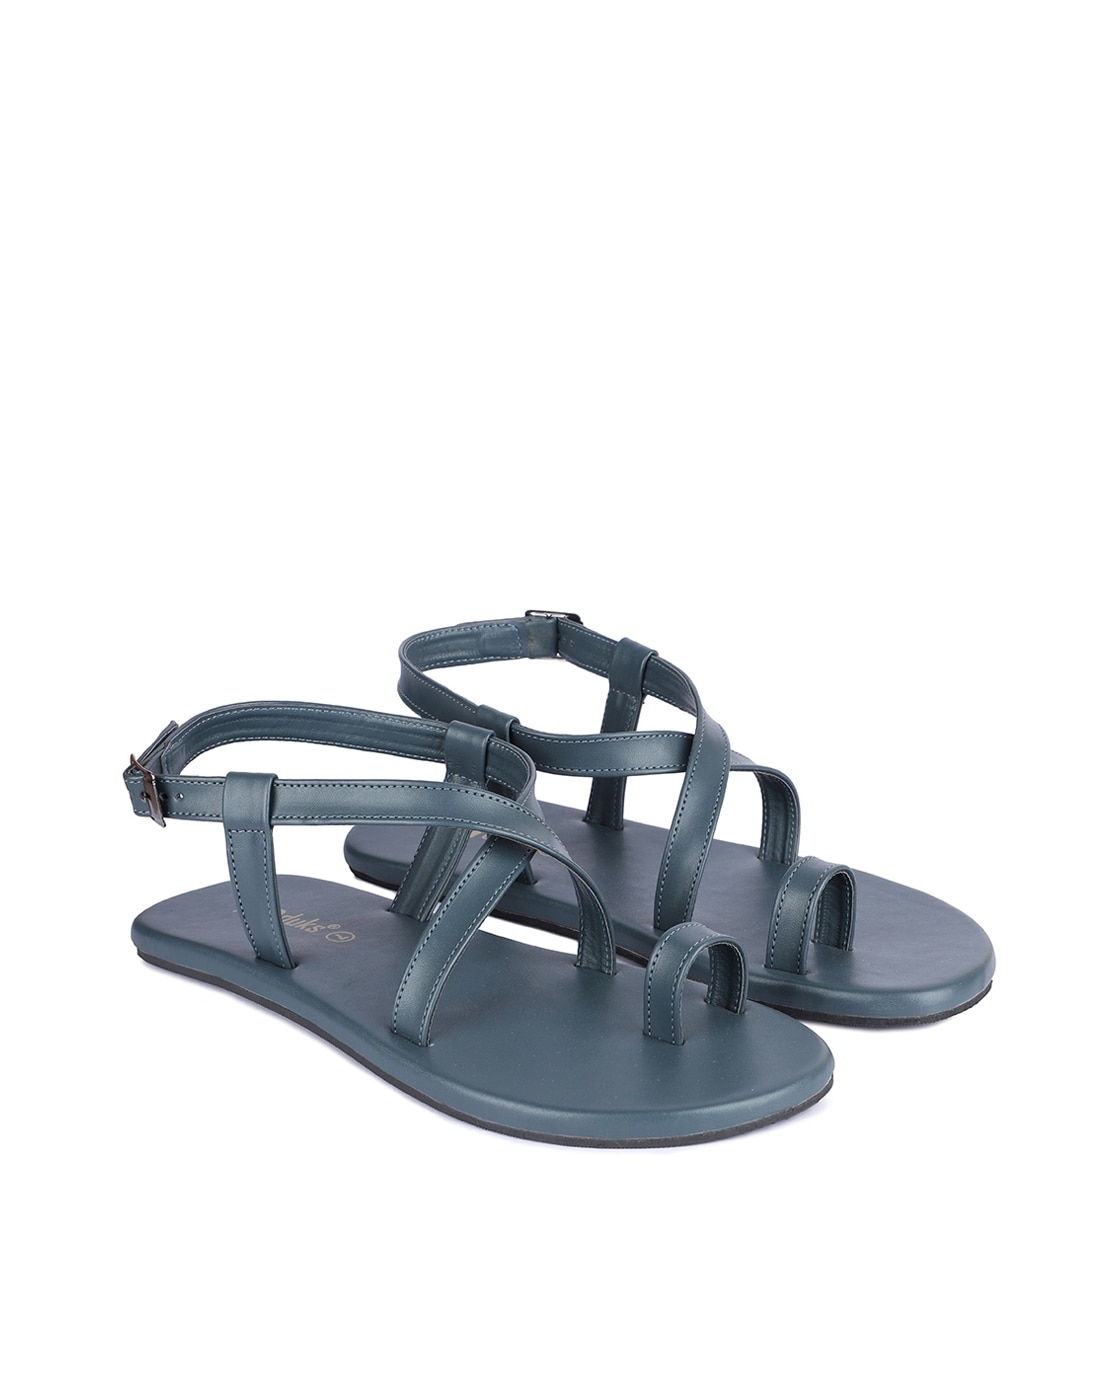 Buy Men Tan Casual Sandals Online | SKU: 18-1592-23-40-Metro Shoes